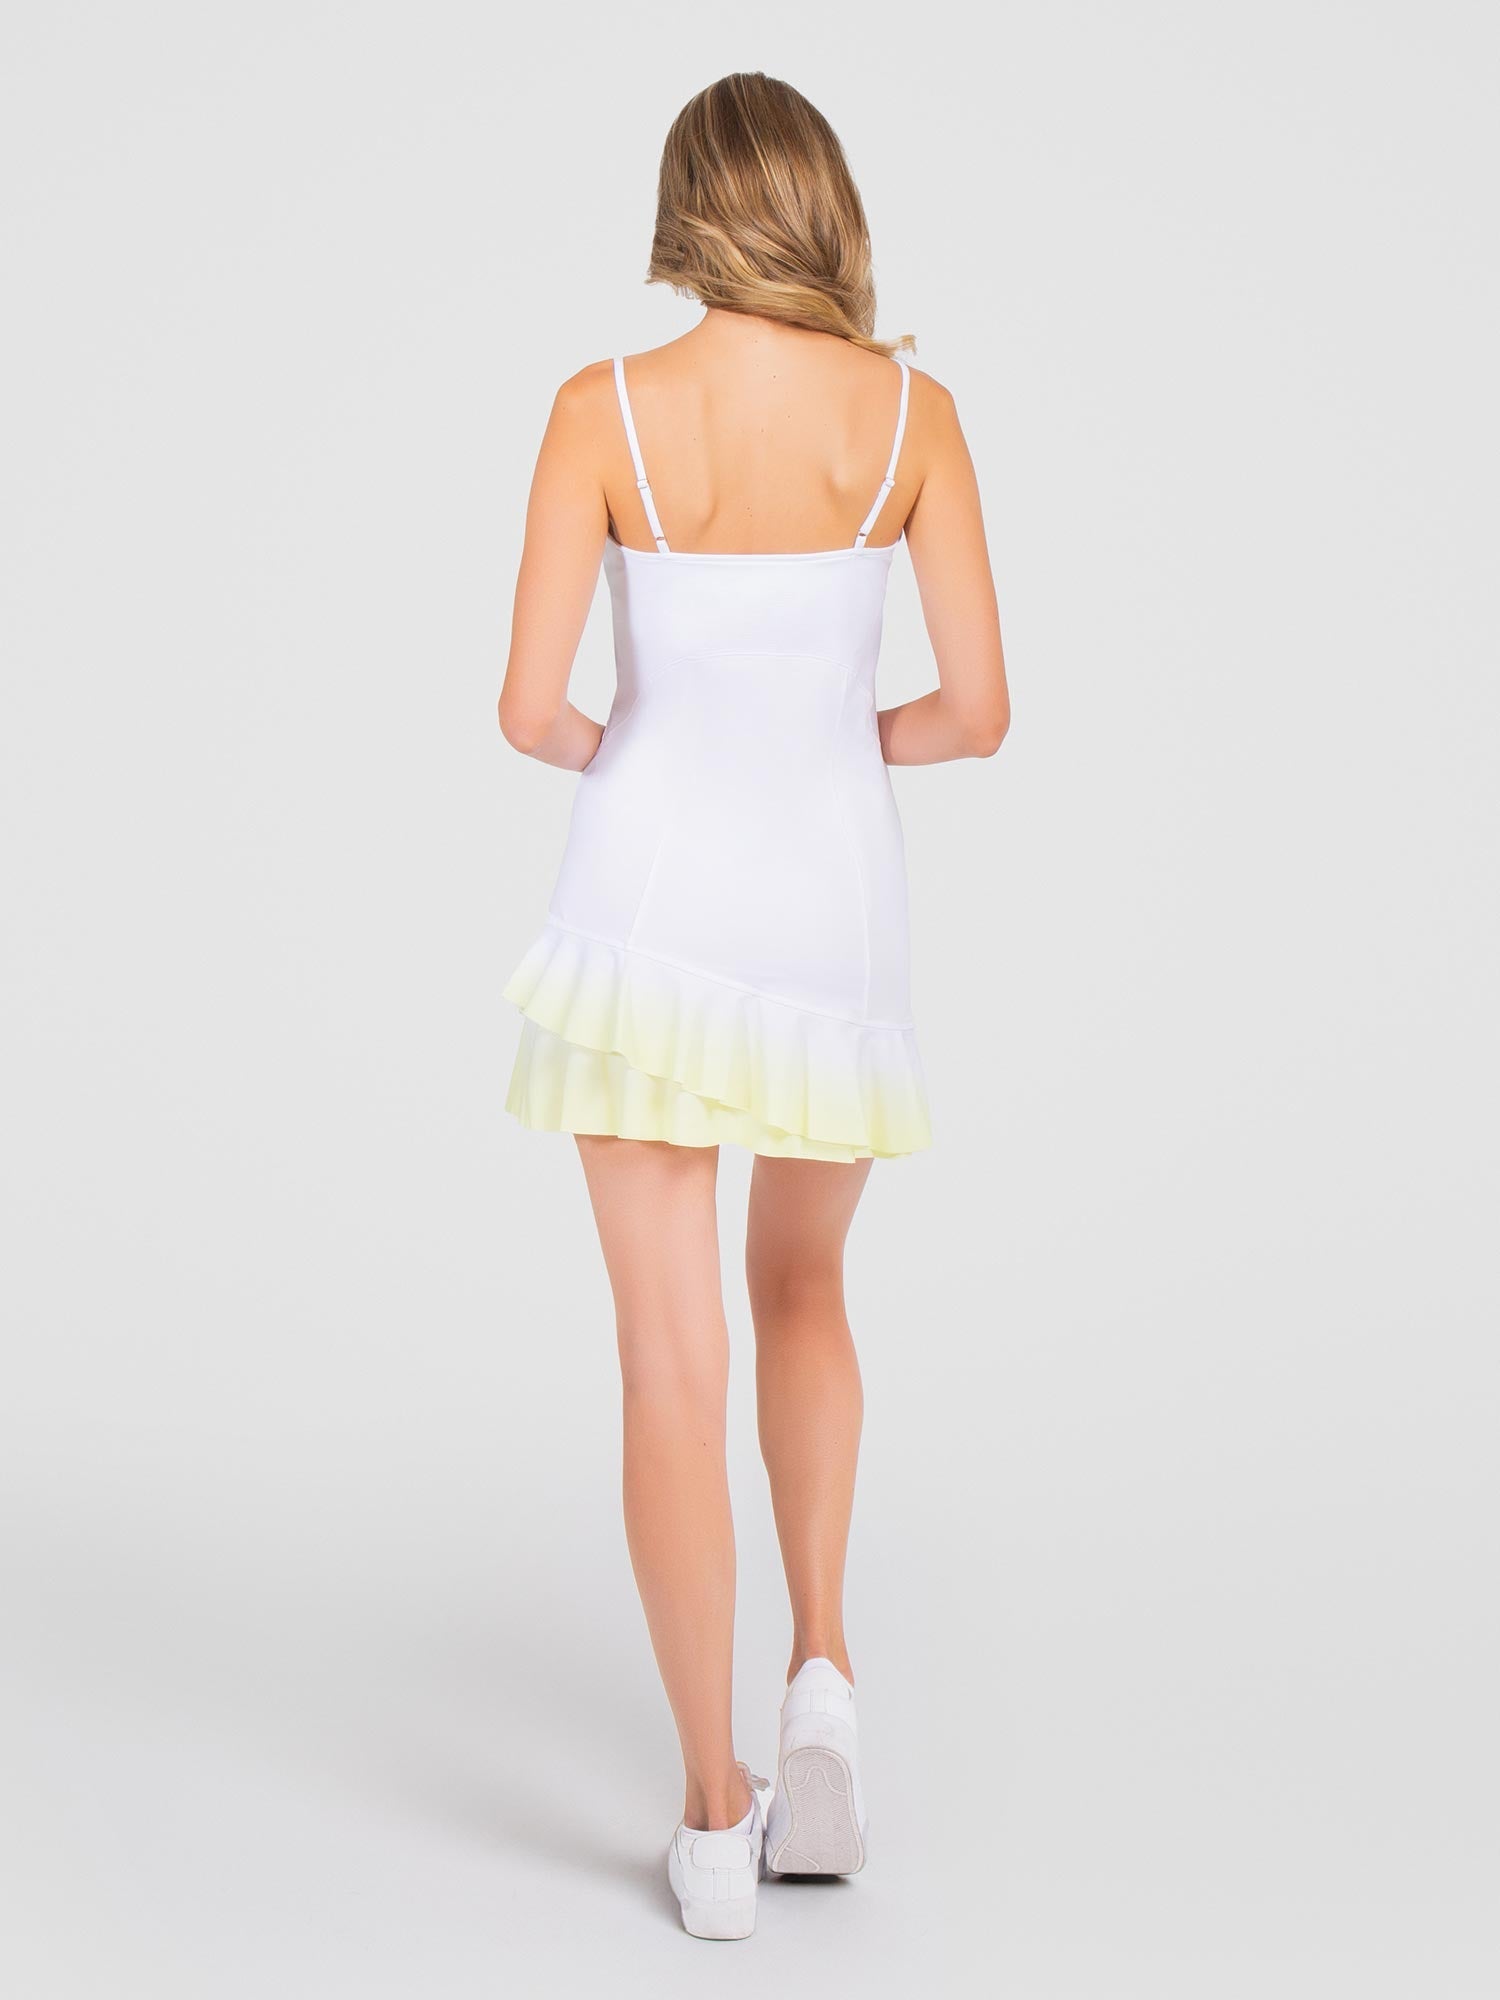 Pearl Adjustable Strap Tennis Dress - White/Zest Ombre